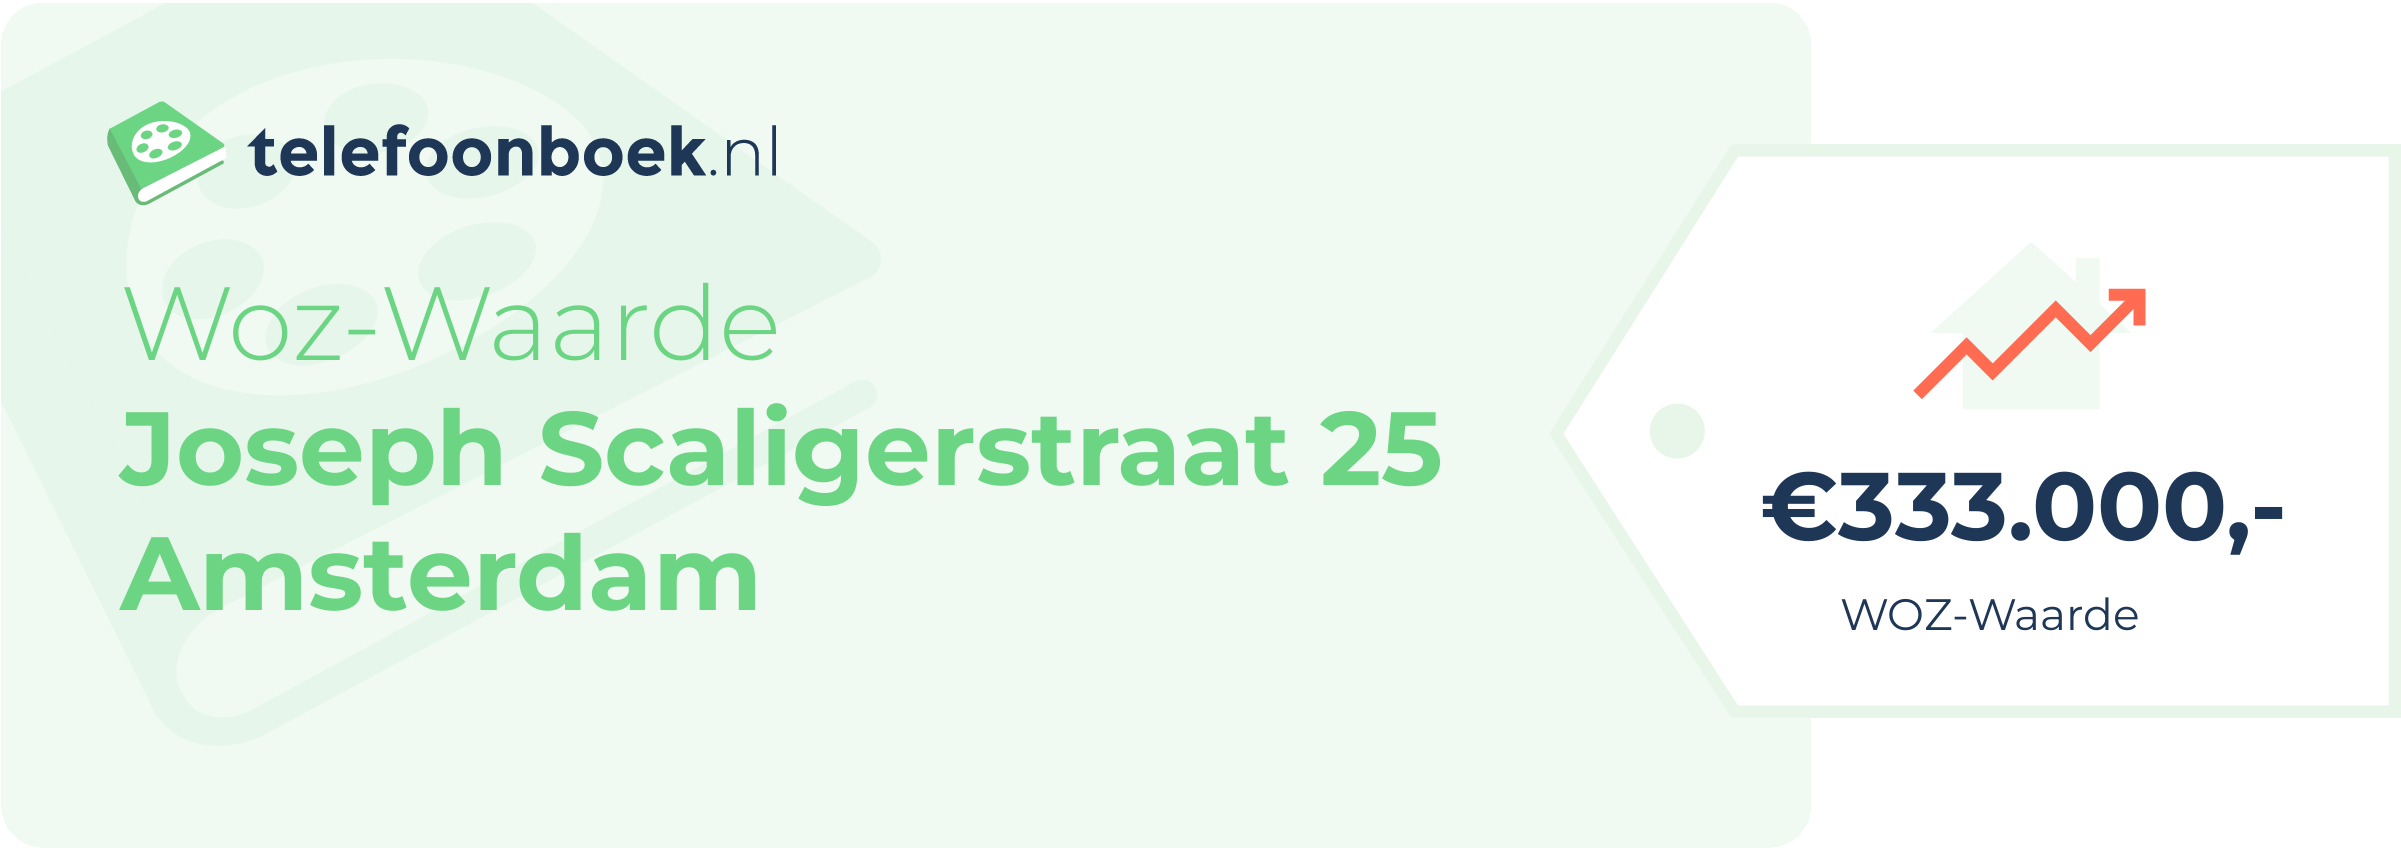 WOZ-waarde Joseph Scaligerstraat 25 Amsterdam